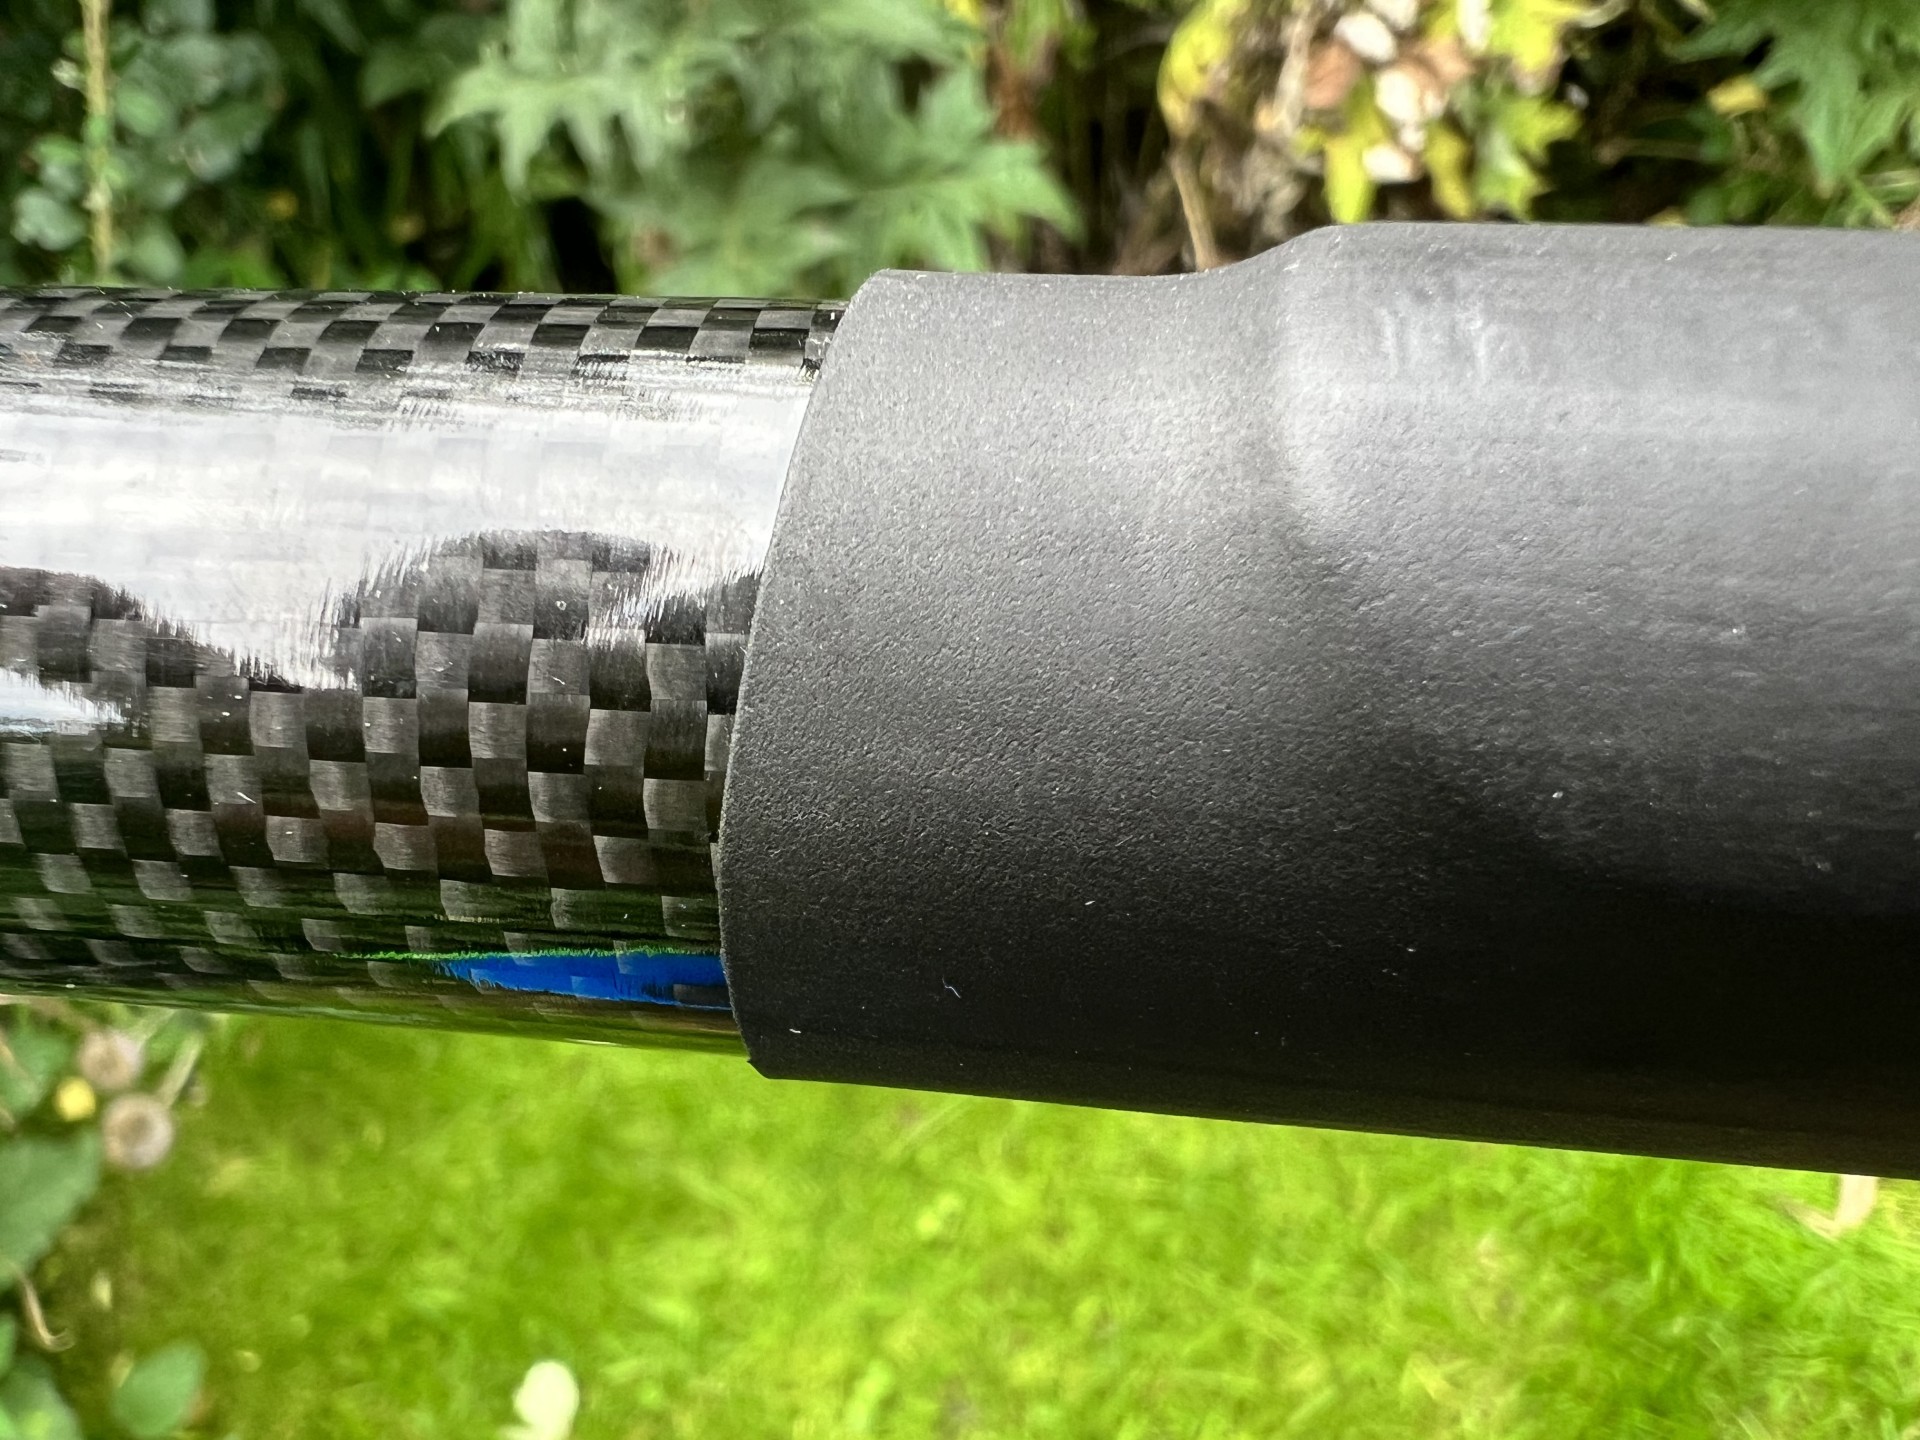 Pliable soft rubber hand grips over carbon fibre shaft.